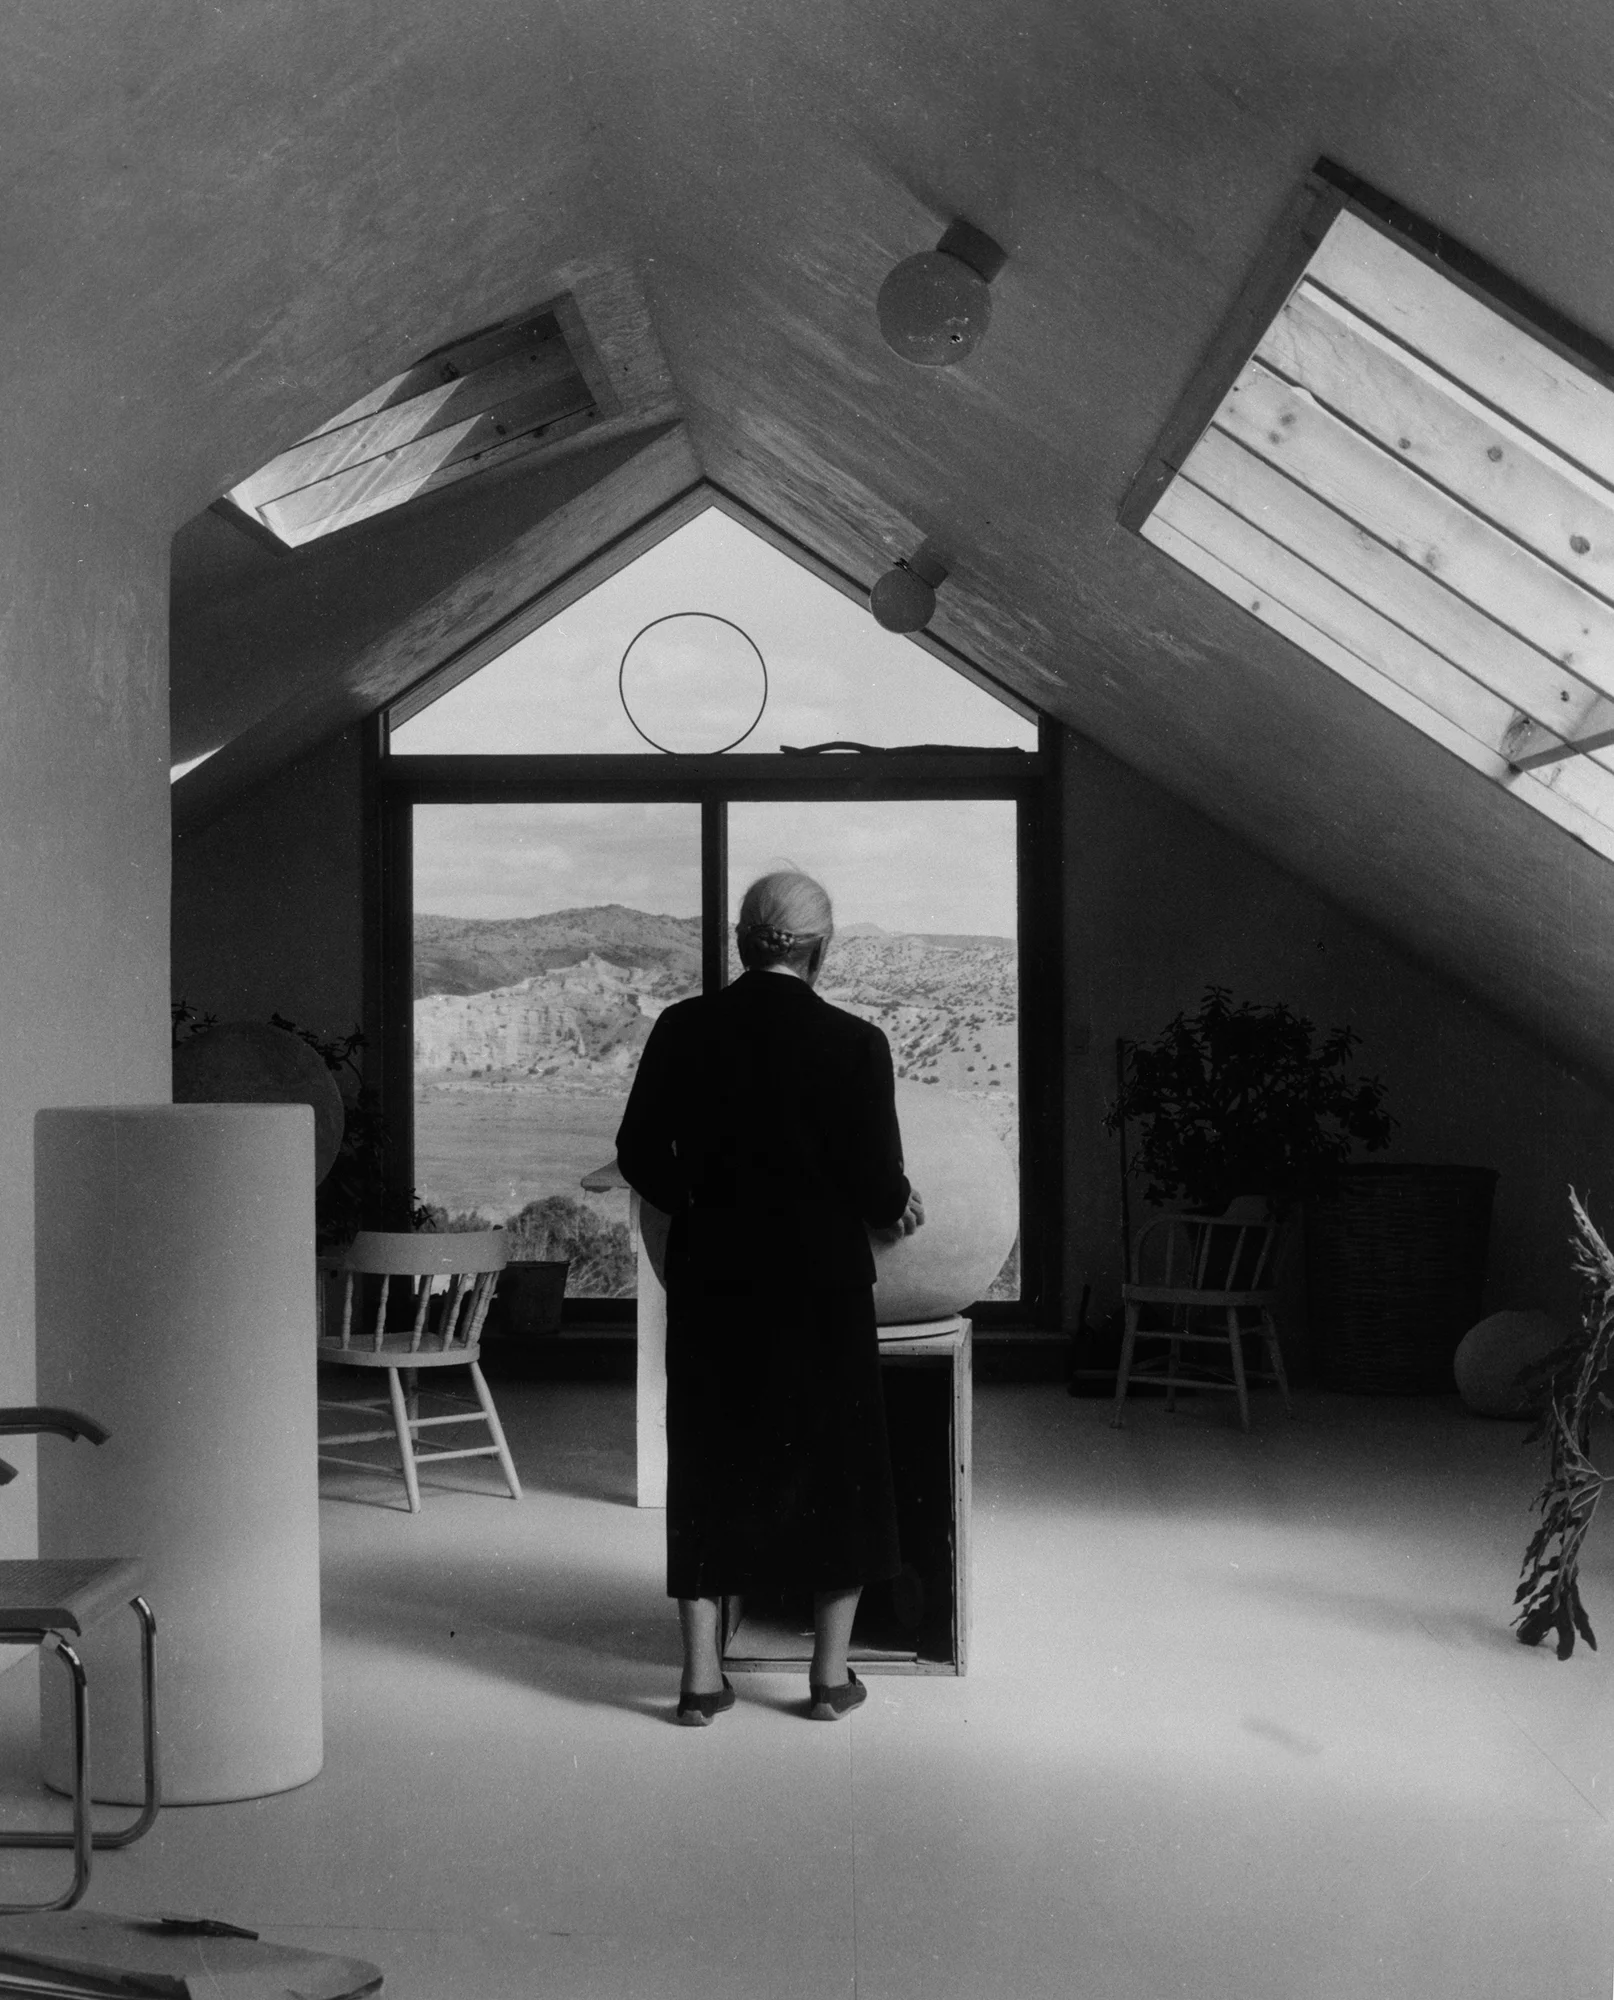  Left: Georgia O’Keeffe in Juan Hamilton's Studio, 1981 Right: Georgia O'Keeffe at Ghost Ranch, 1964